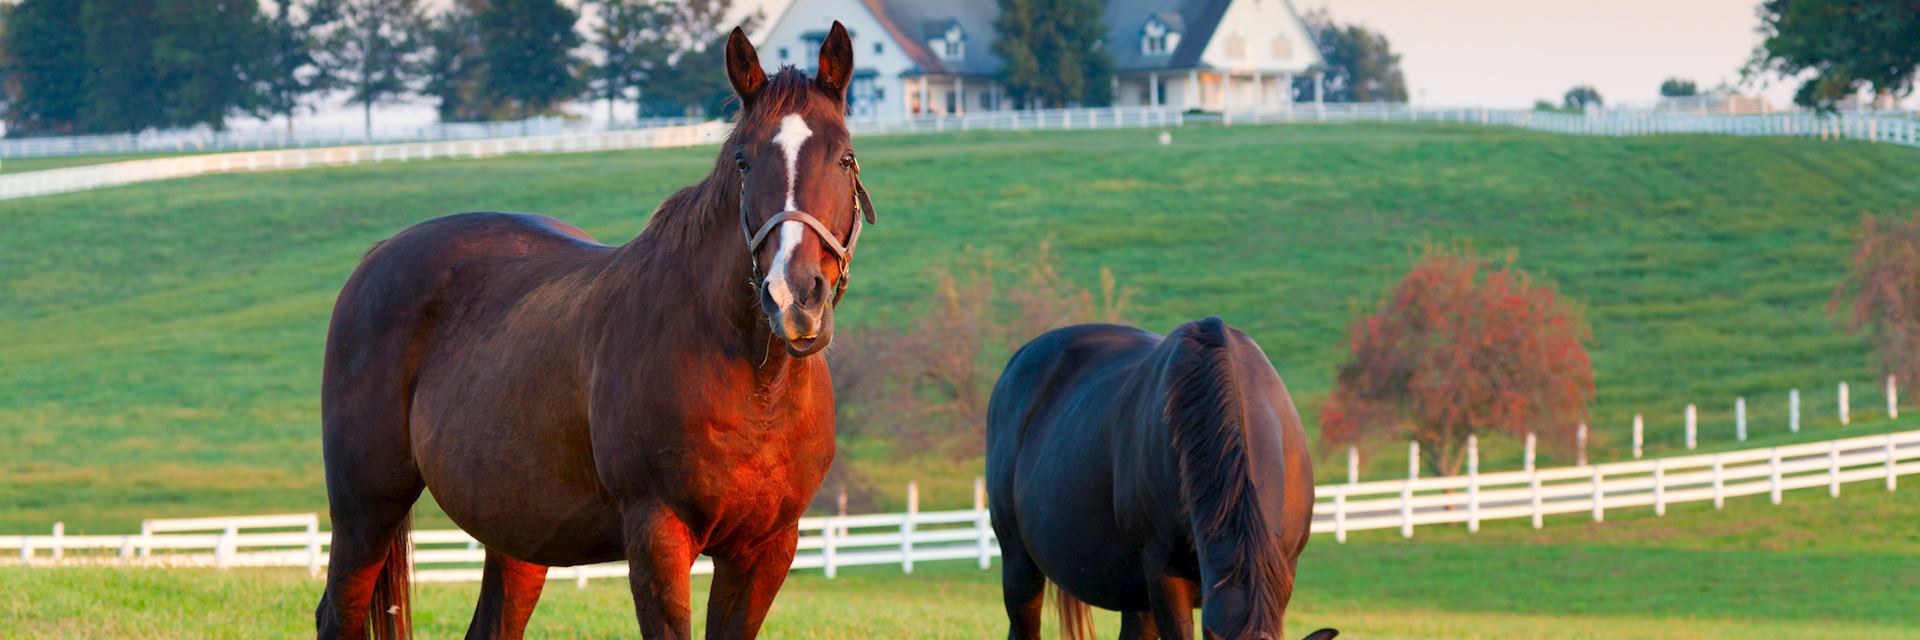 Horses in Lexington, Kentucky